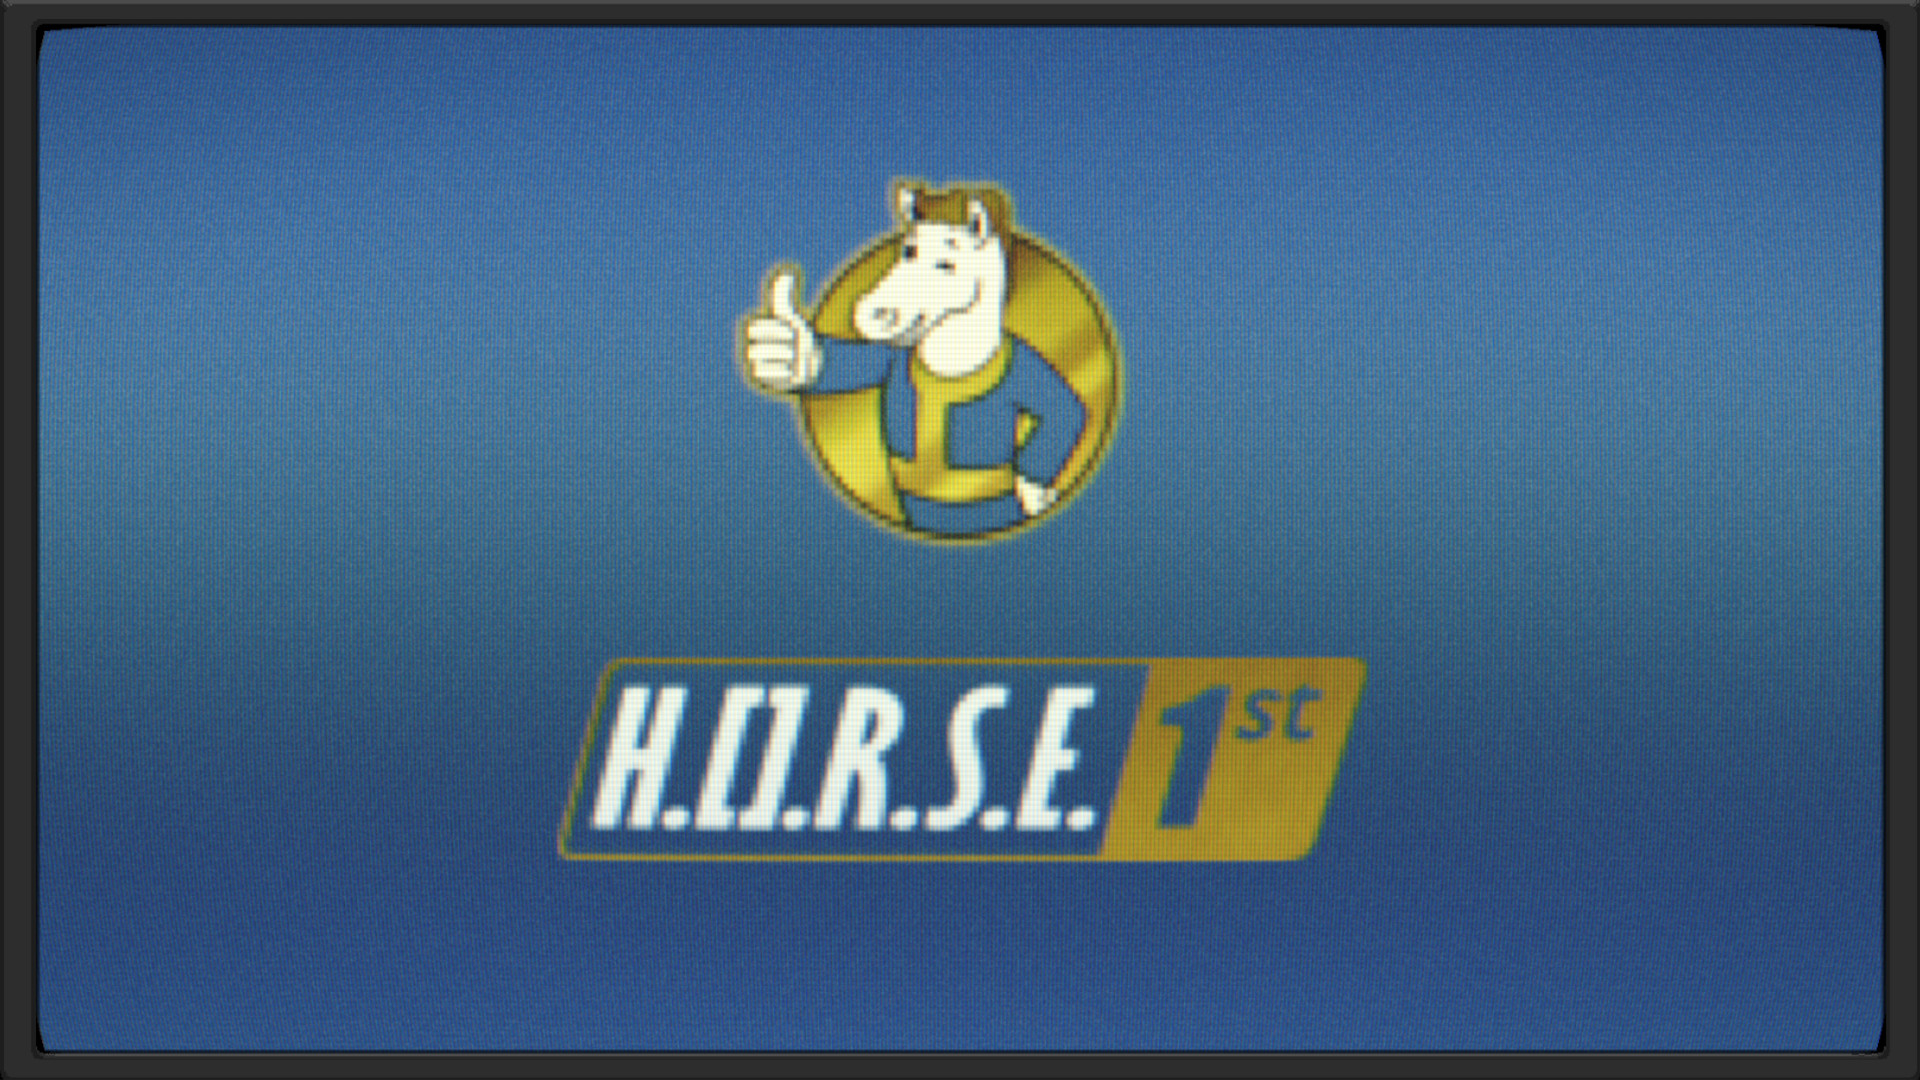 Progress Bar Simulator - H.O.R.S.E. 1st Featured Screenshot #1